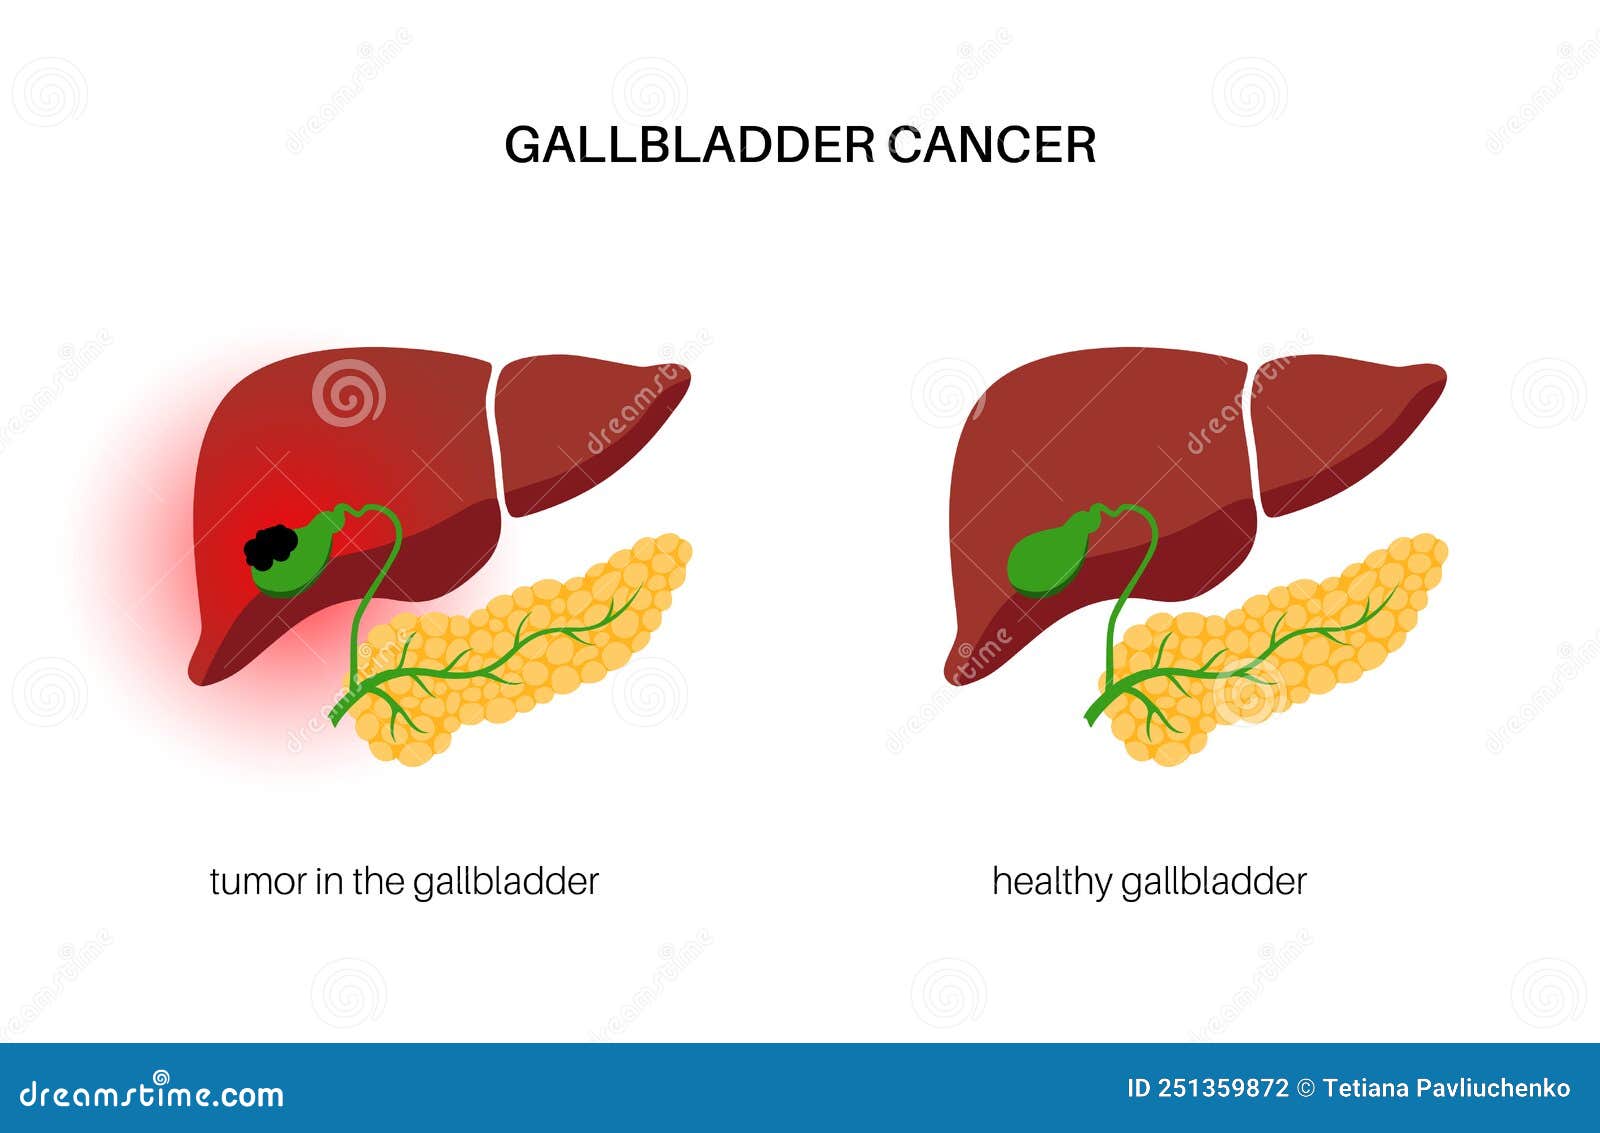 Gallbladder cancer anatomy stock vector. Illustration of digestive ...